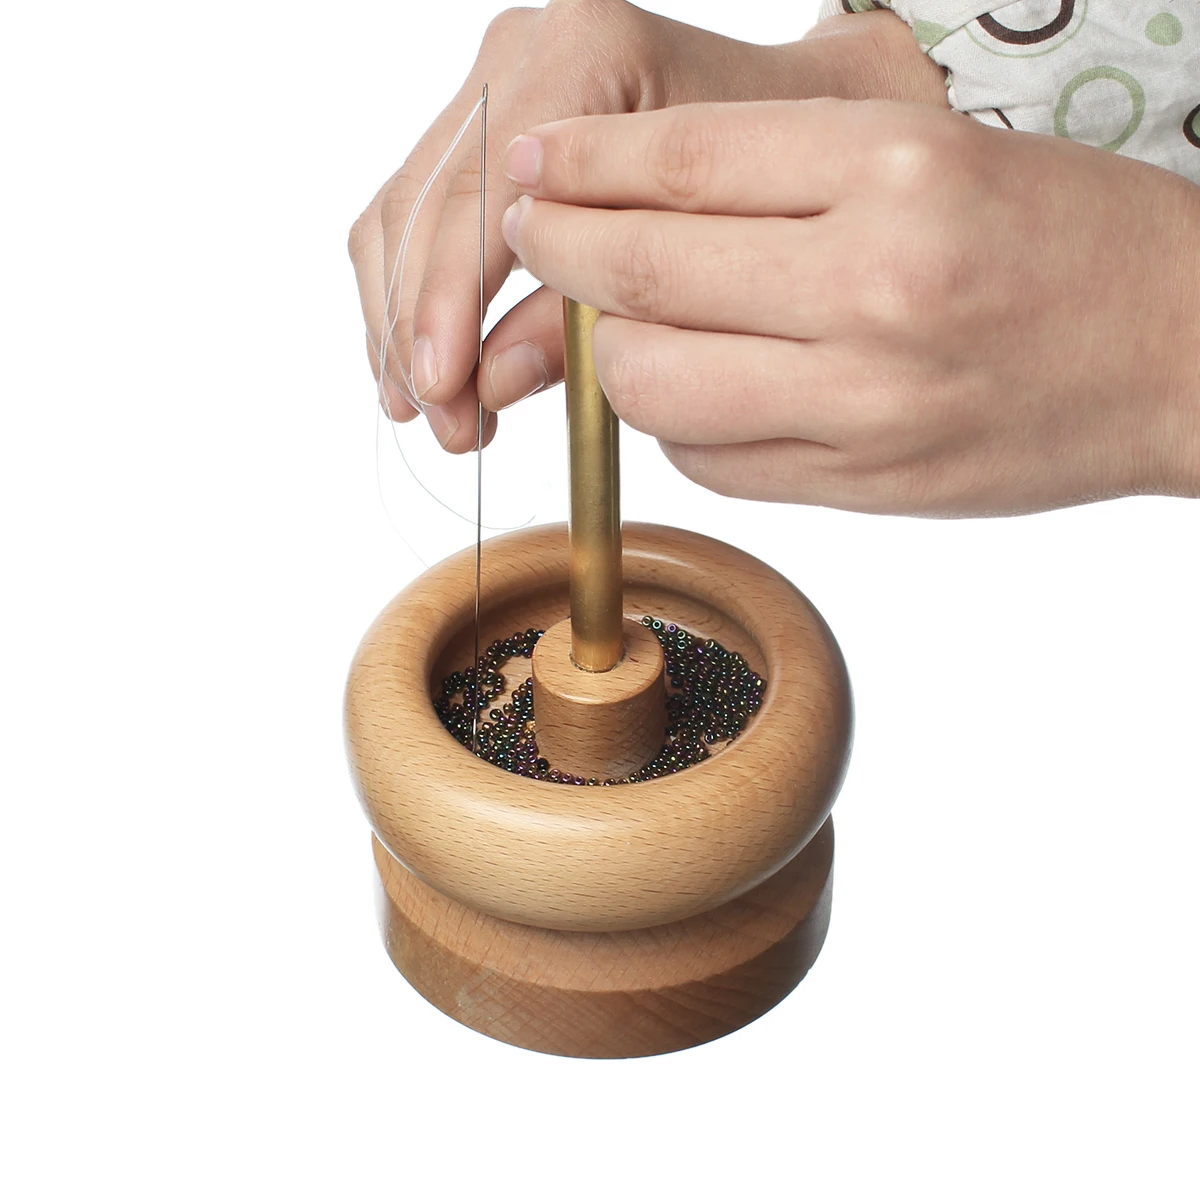 ManOnMoon Wooden Mini Bead Spinner Jewelry Making Spinning Holder Tool